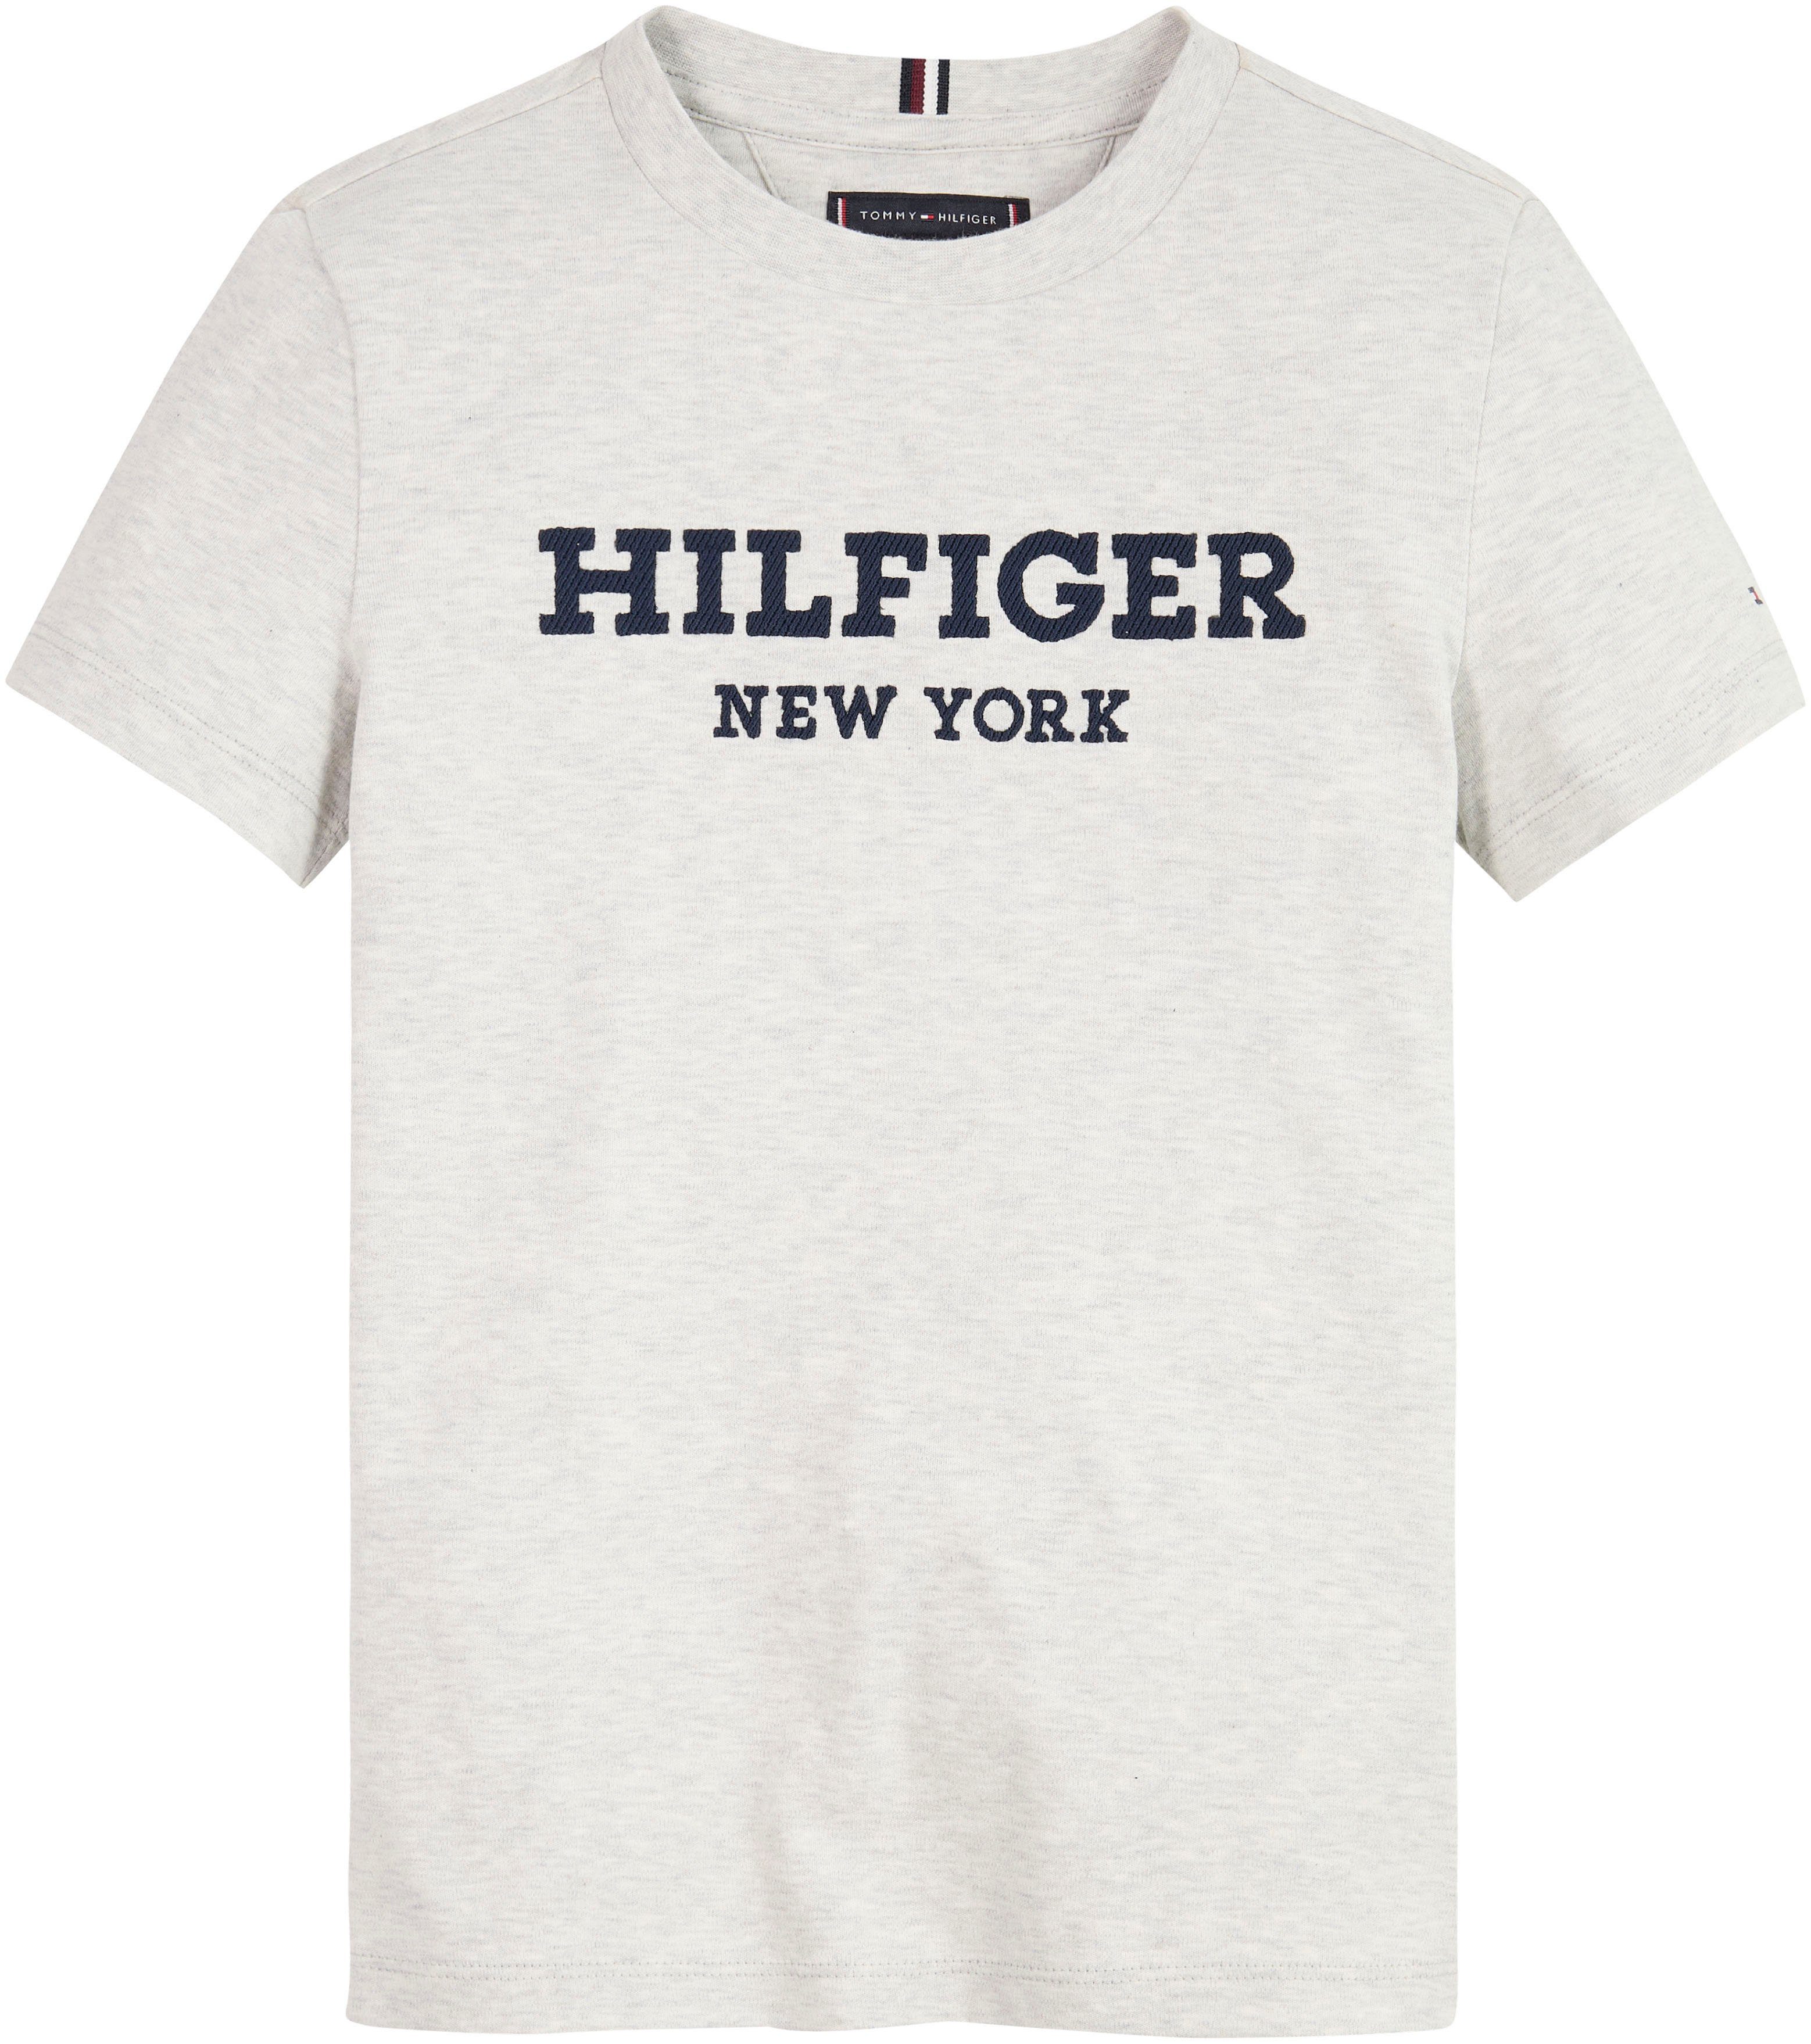 LOGO New_Light_Grey_Heather HILFIGER Statement T-Shirt Hilfiger Print mit S/S Hilfiger TEE Tommy